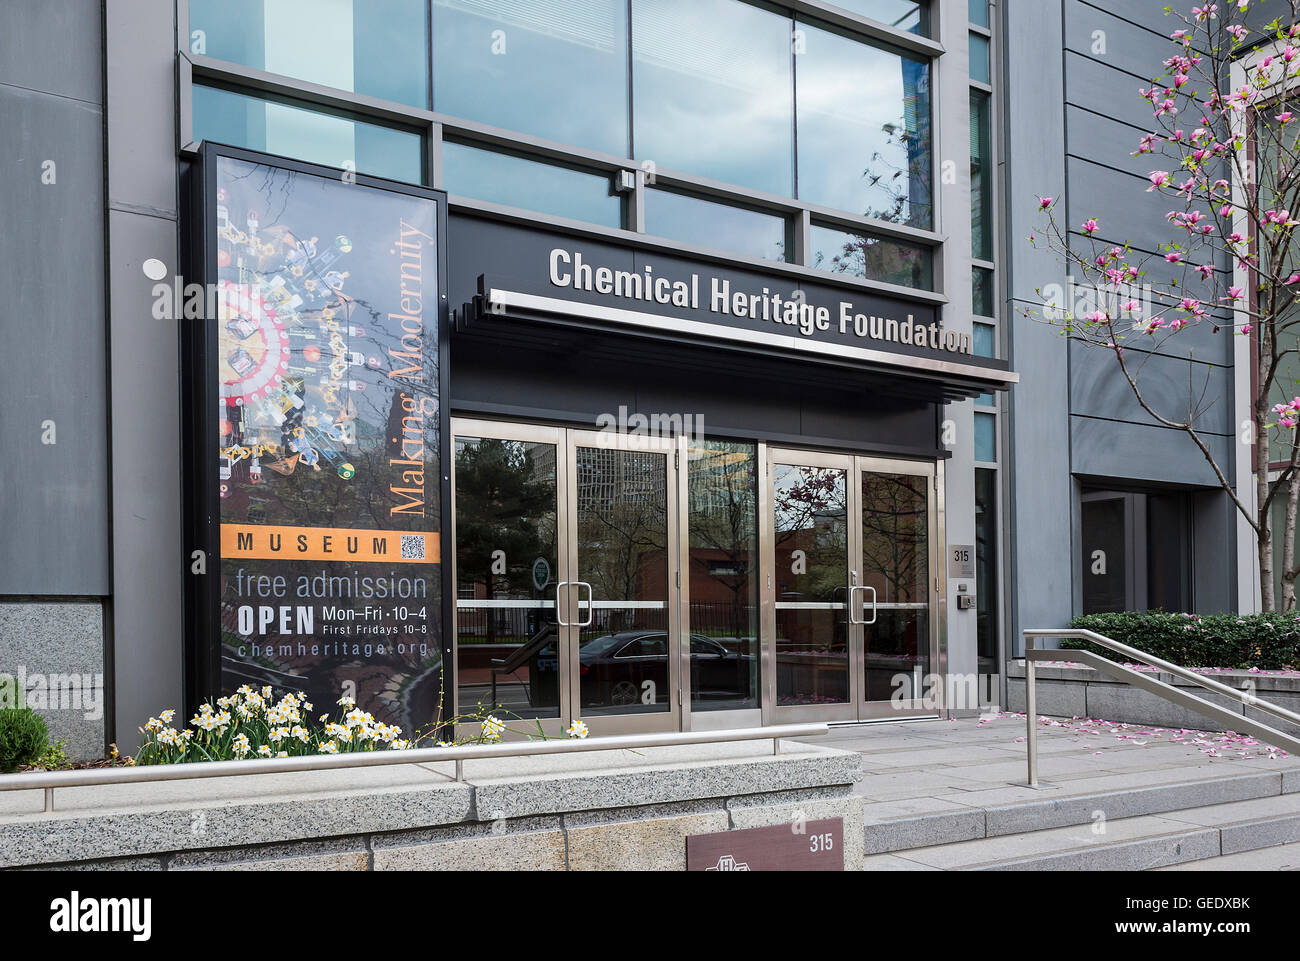 Chemical Heritage Foundation, Philadelphia, Pennsylvania, USA Banque D'Images